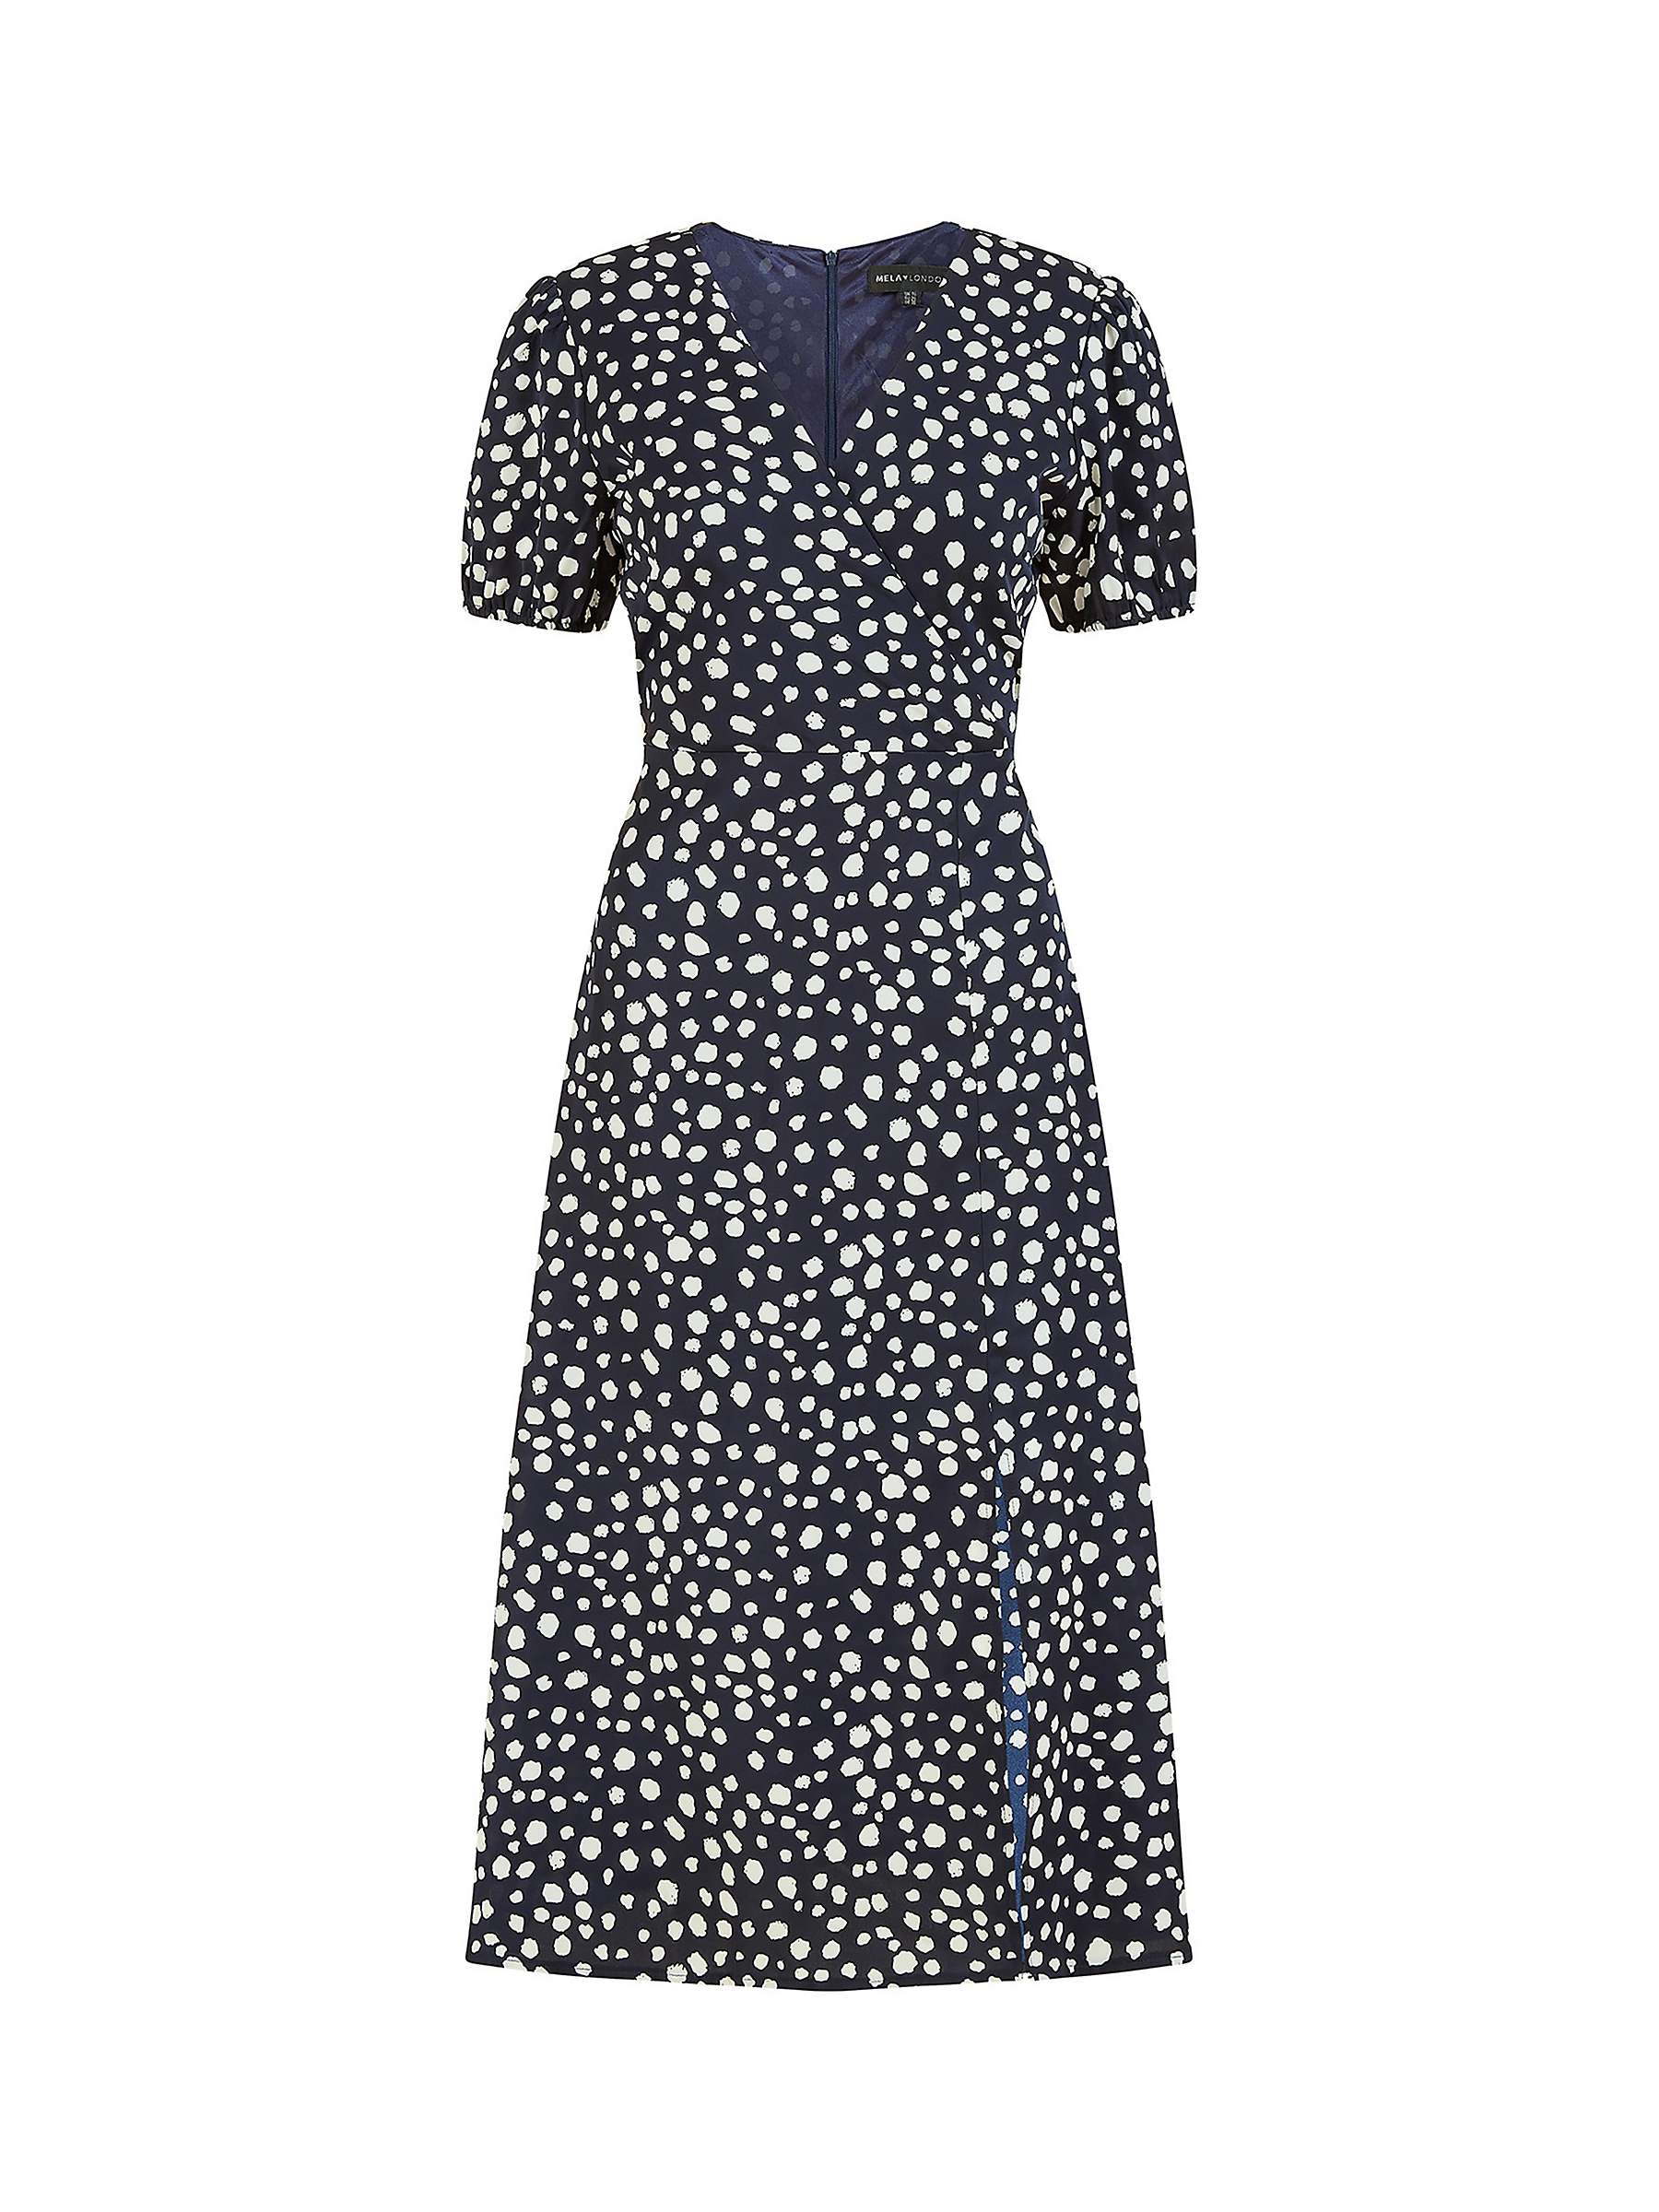 Buy Mela London Mela Spot Print Midi Tea Dress, Navy Online at johnlewis.com